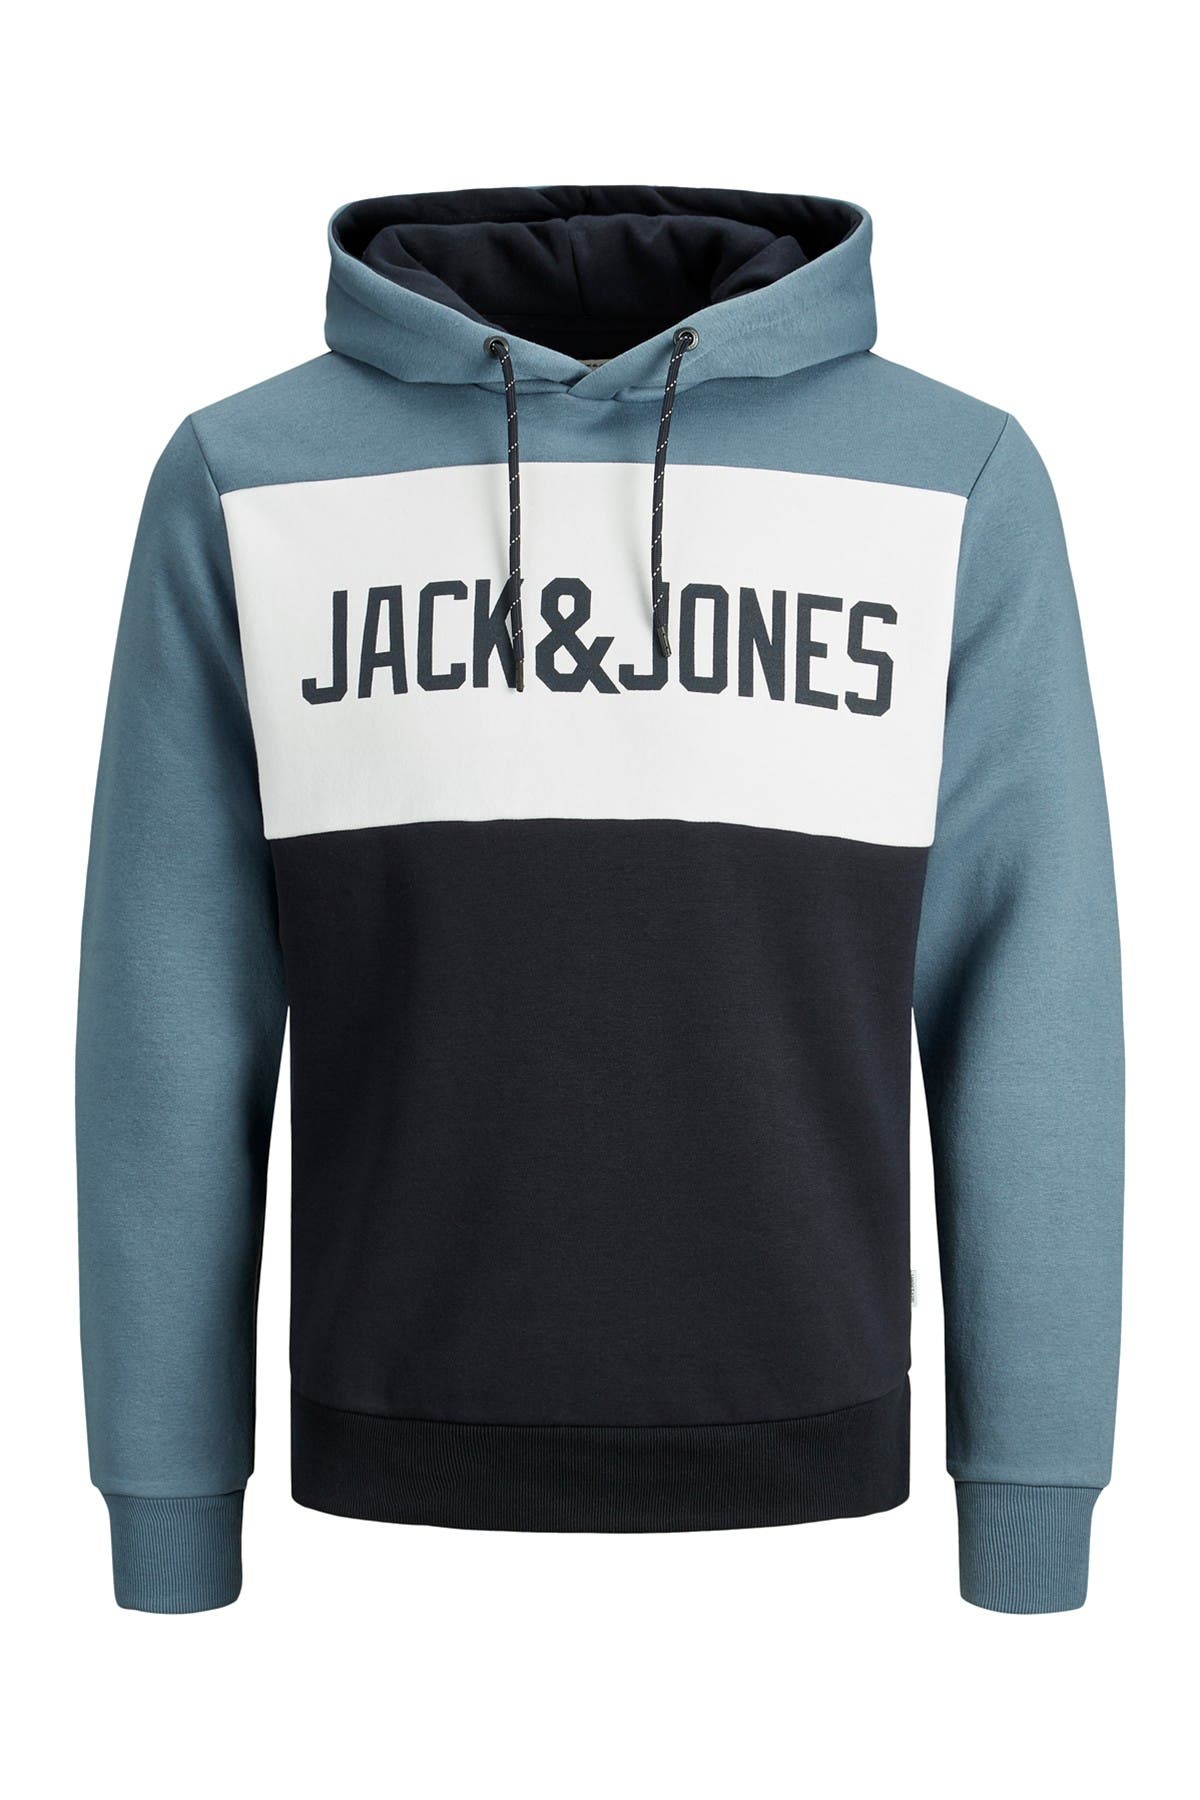 Jack & Jones Logo Colorblock Hooded Sweatshirt In Dark Blue4